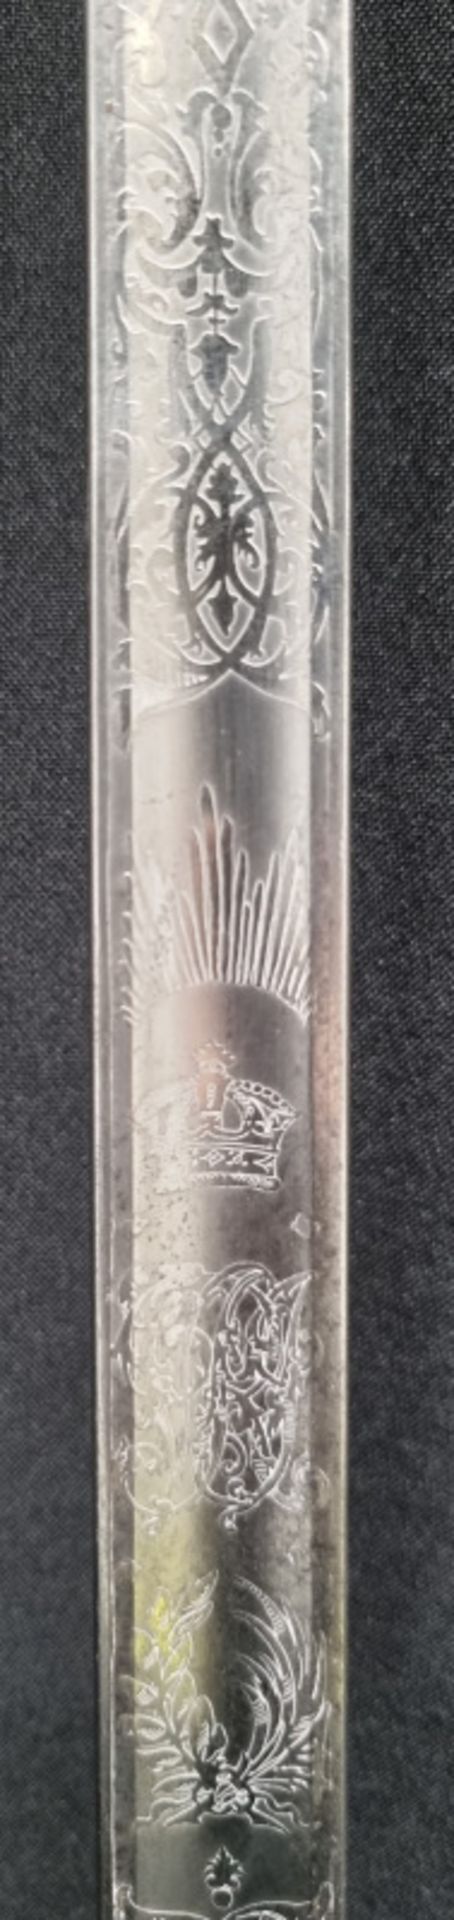 S J Pillin Royal Engineers Ceremonial Sword - serial number 100247 - Image 6 of 10